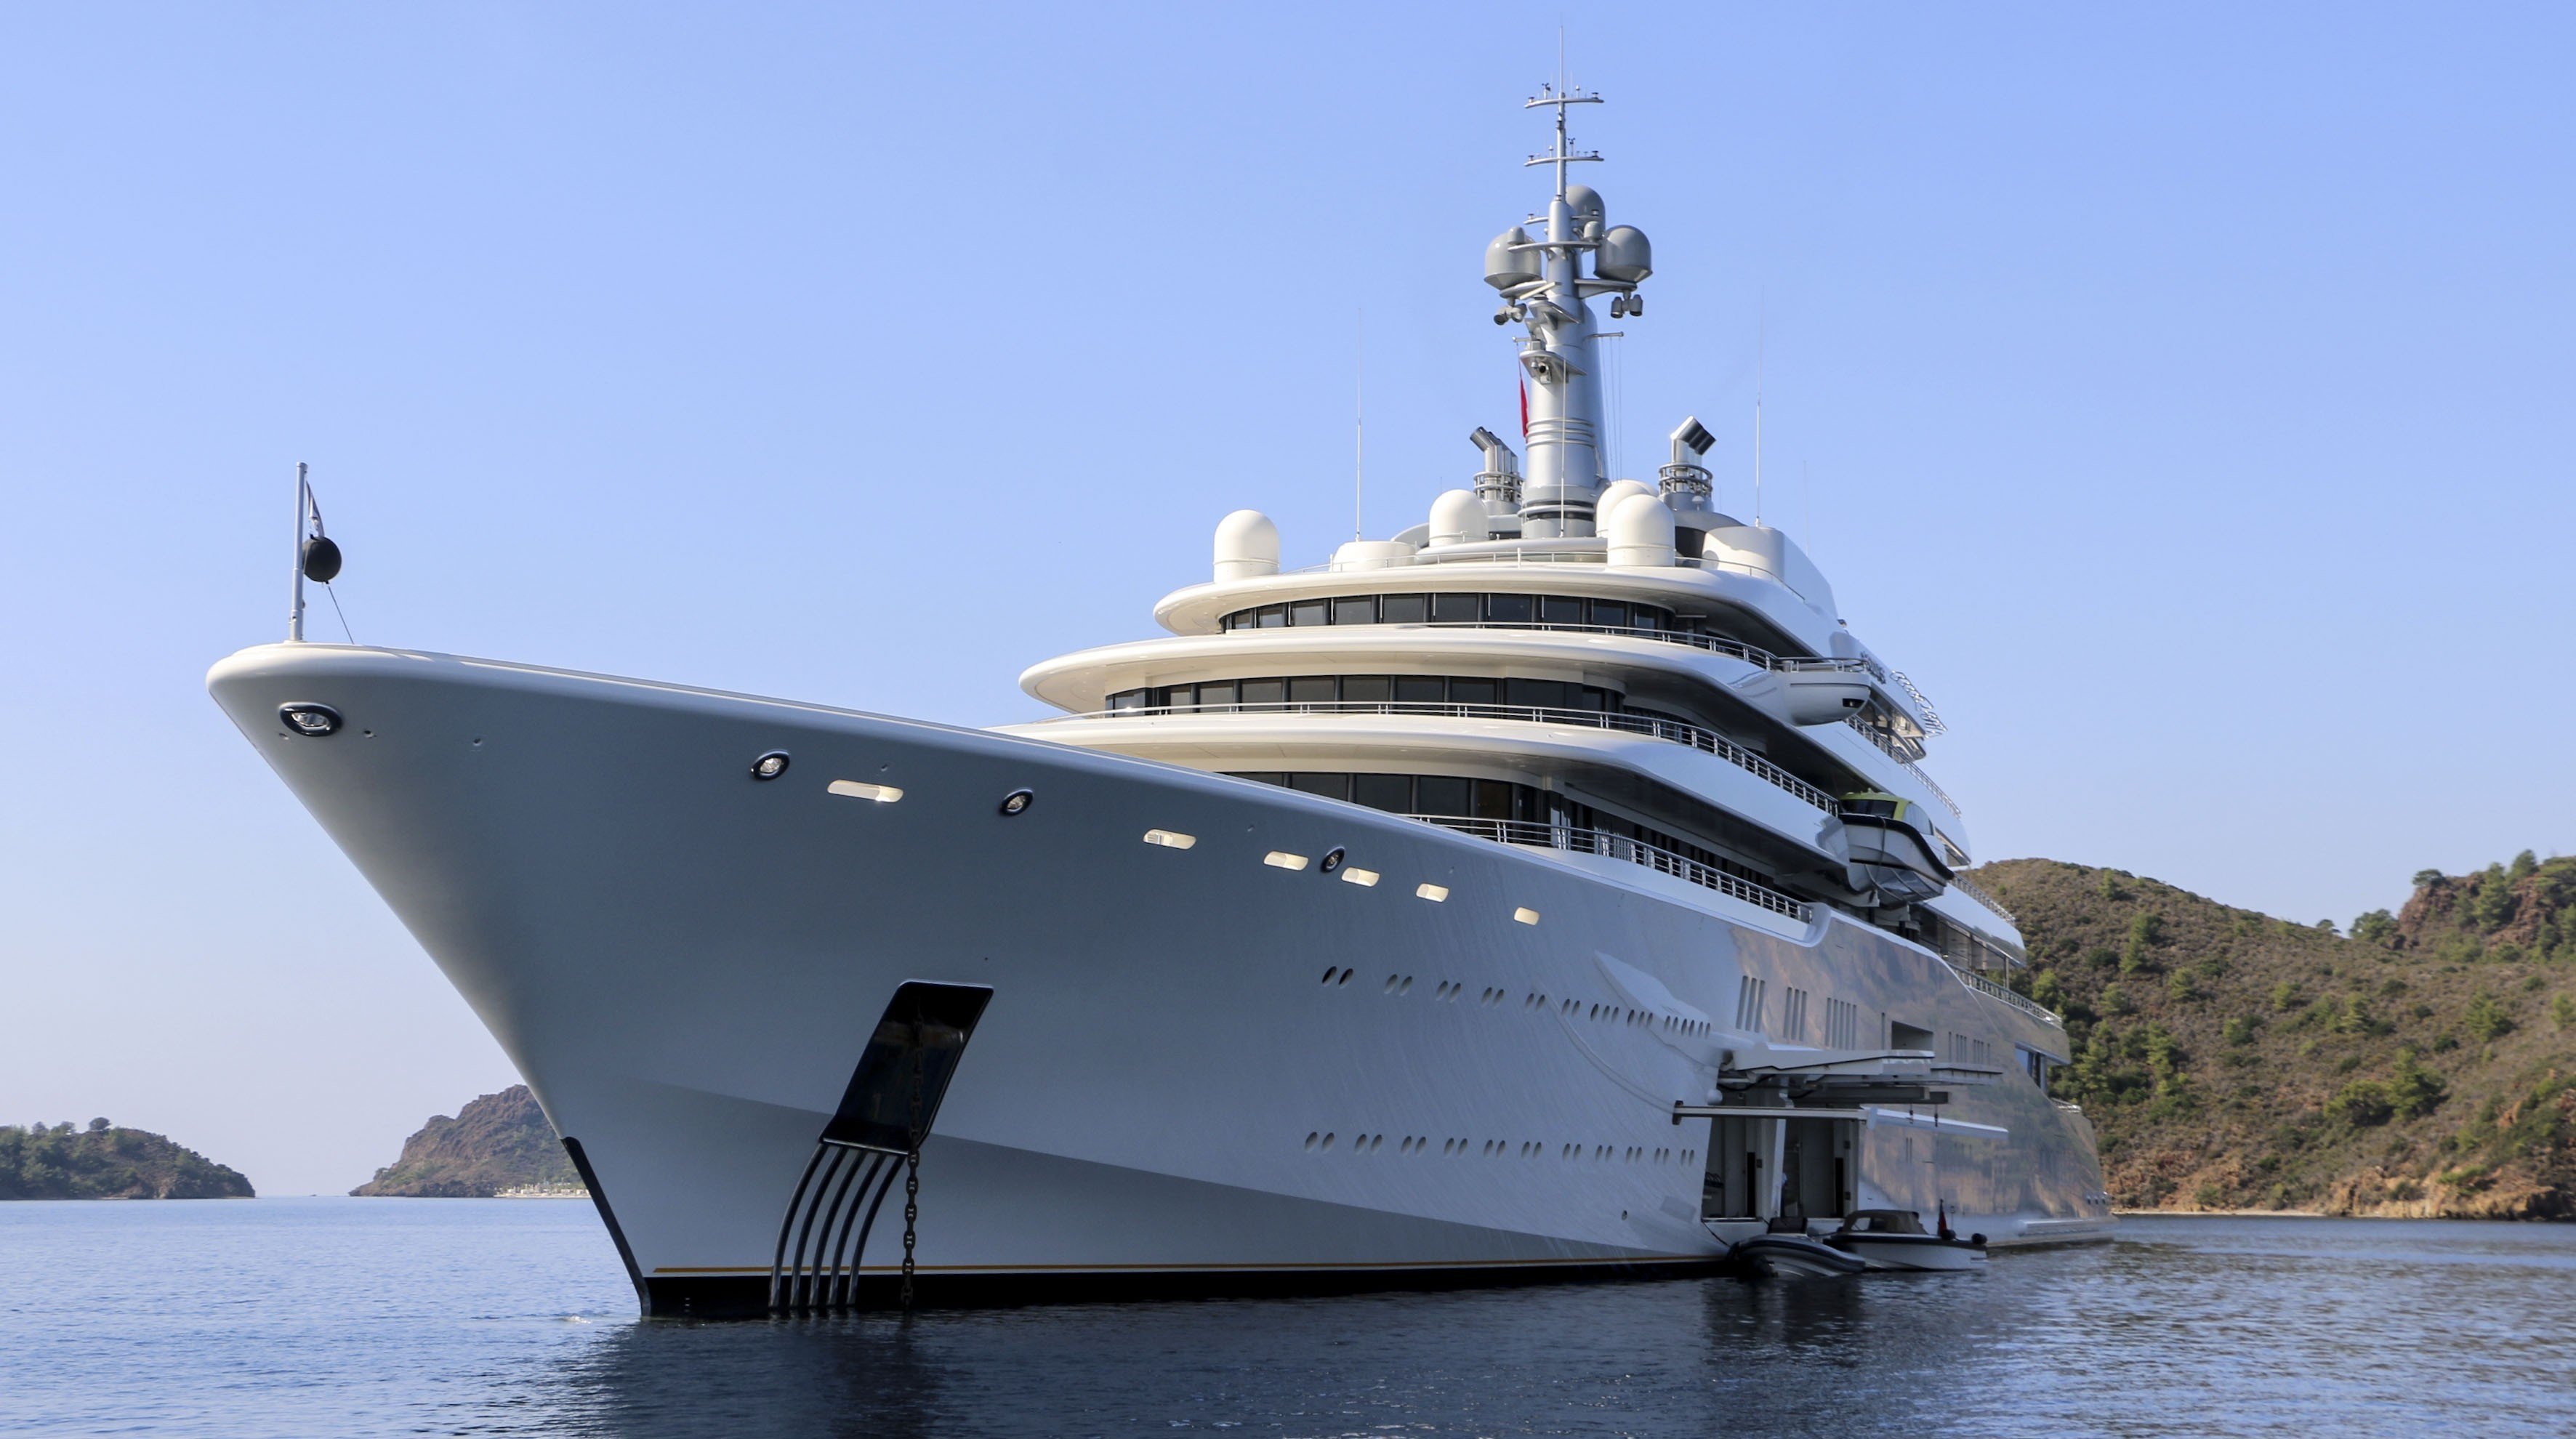 luxury yachts login